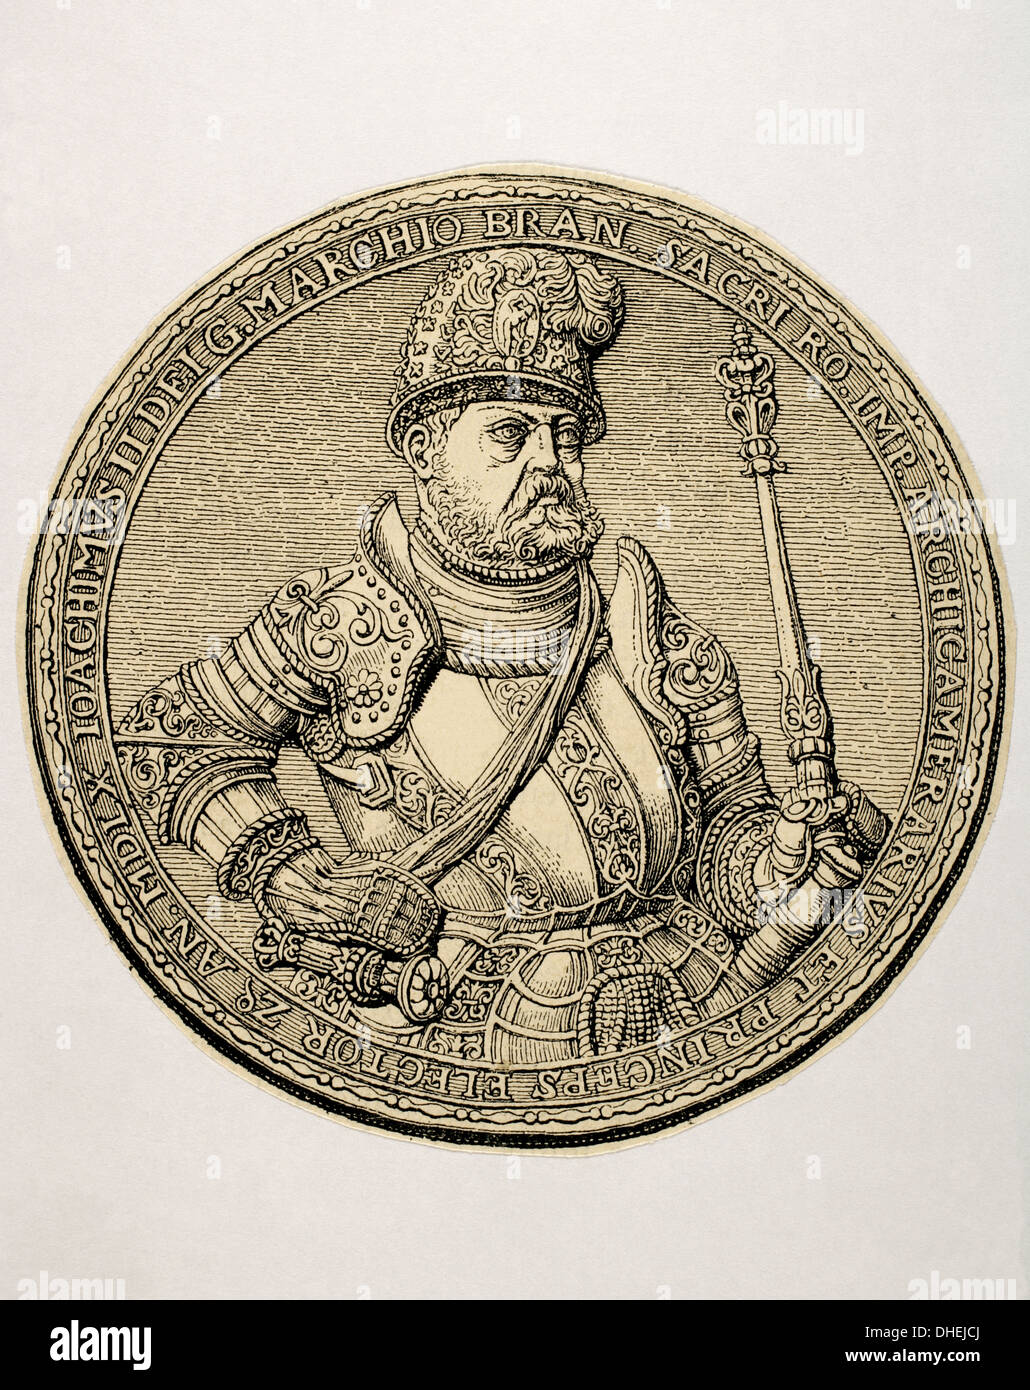 Joachim II Hector (1505-1571). Elector of Brandenburg. Member of the House of Hohenzollern. Engraving. Stock Photo